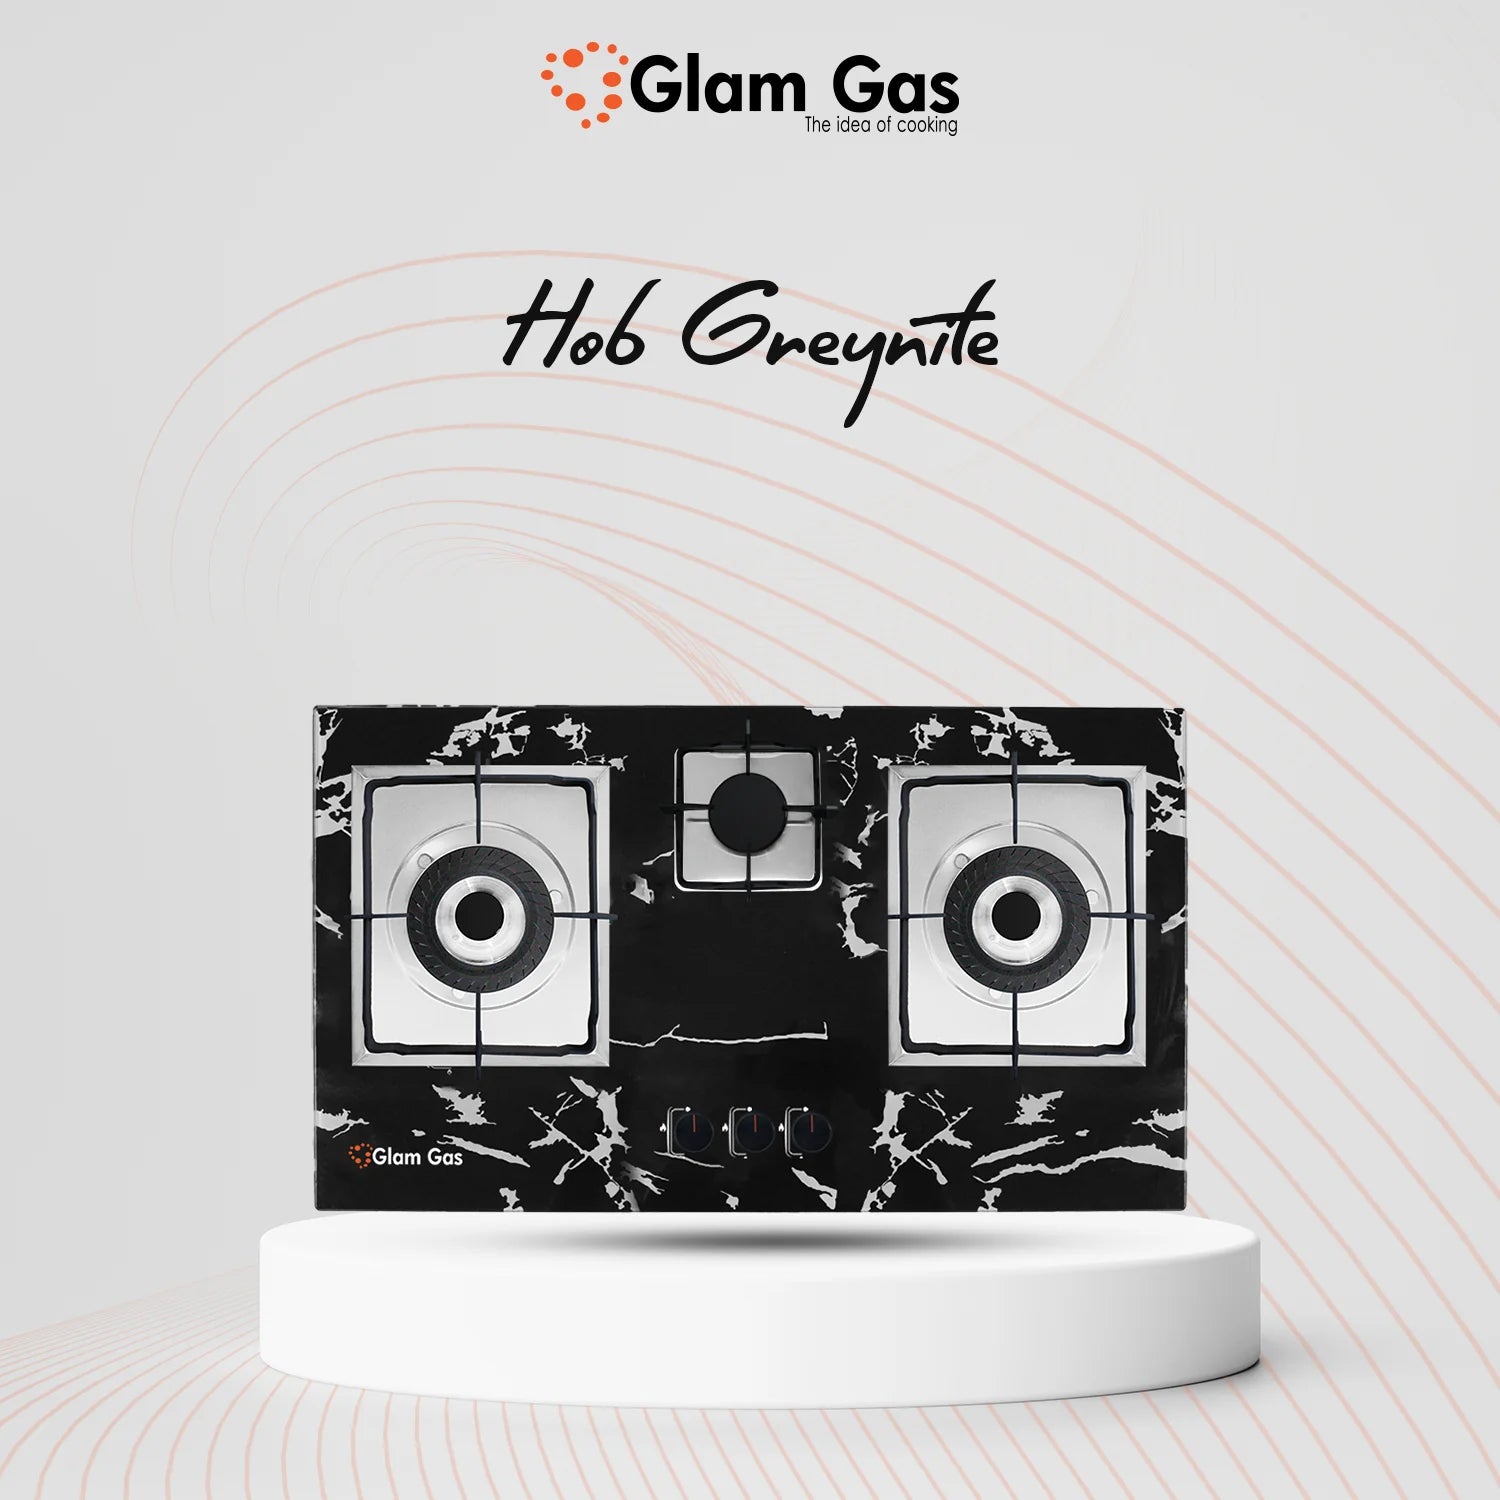 Glam Gas Built In Hobs FoodBook GreyNite Square